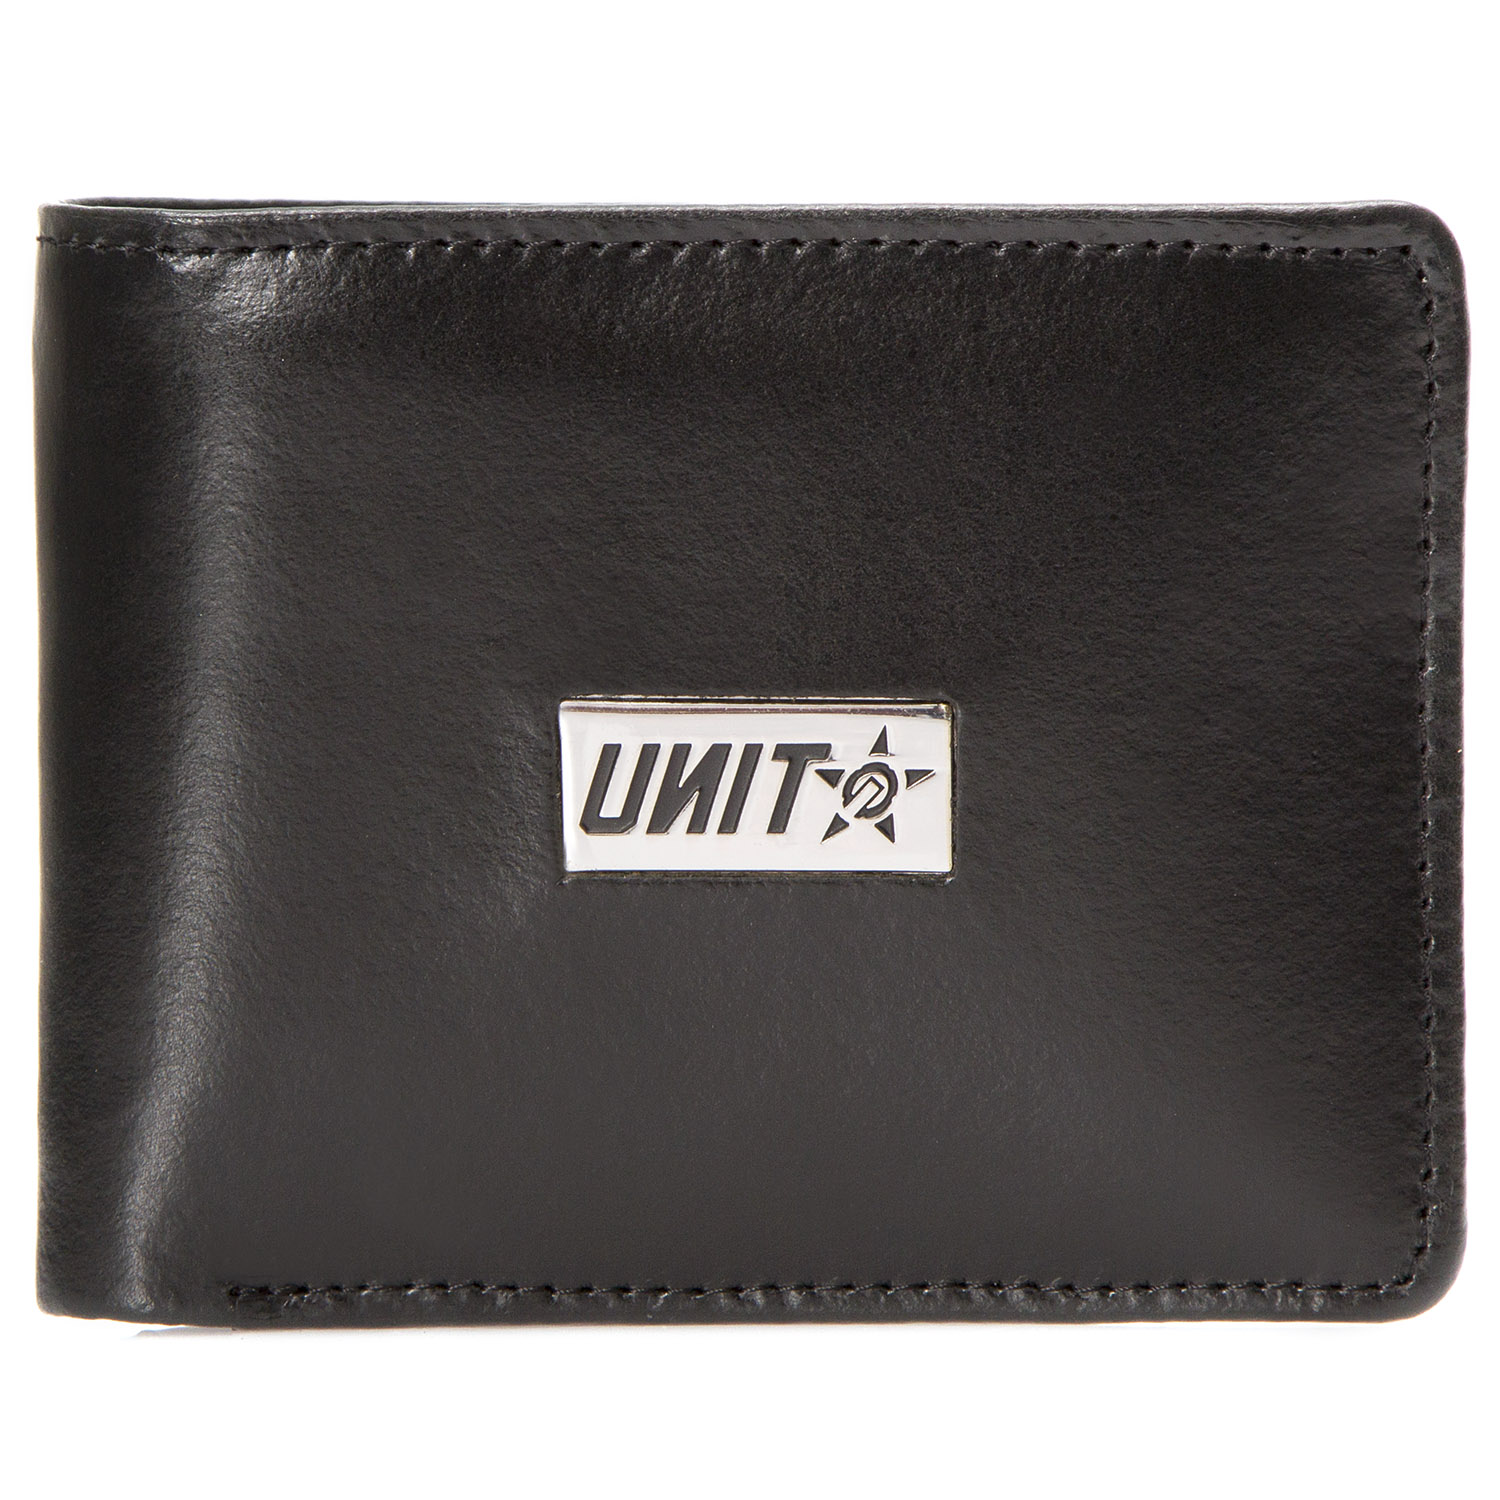 Unit Wallet Monaco Black